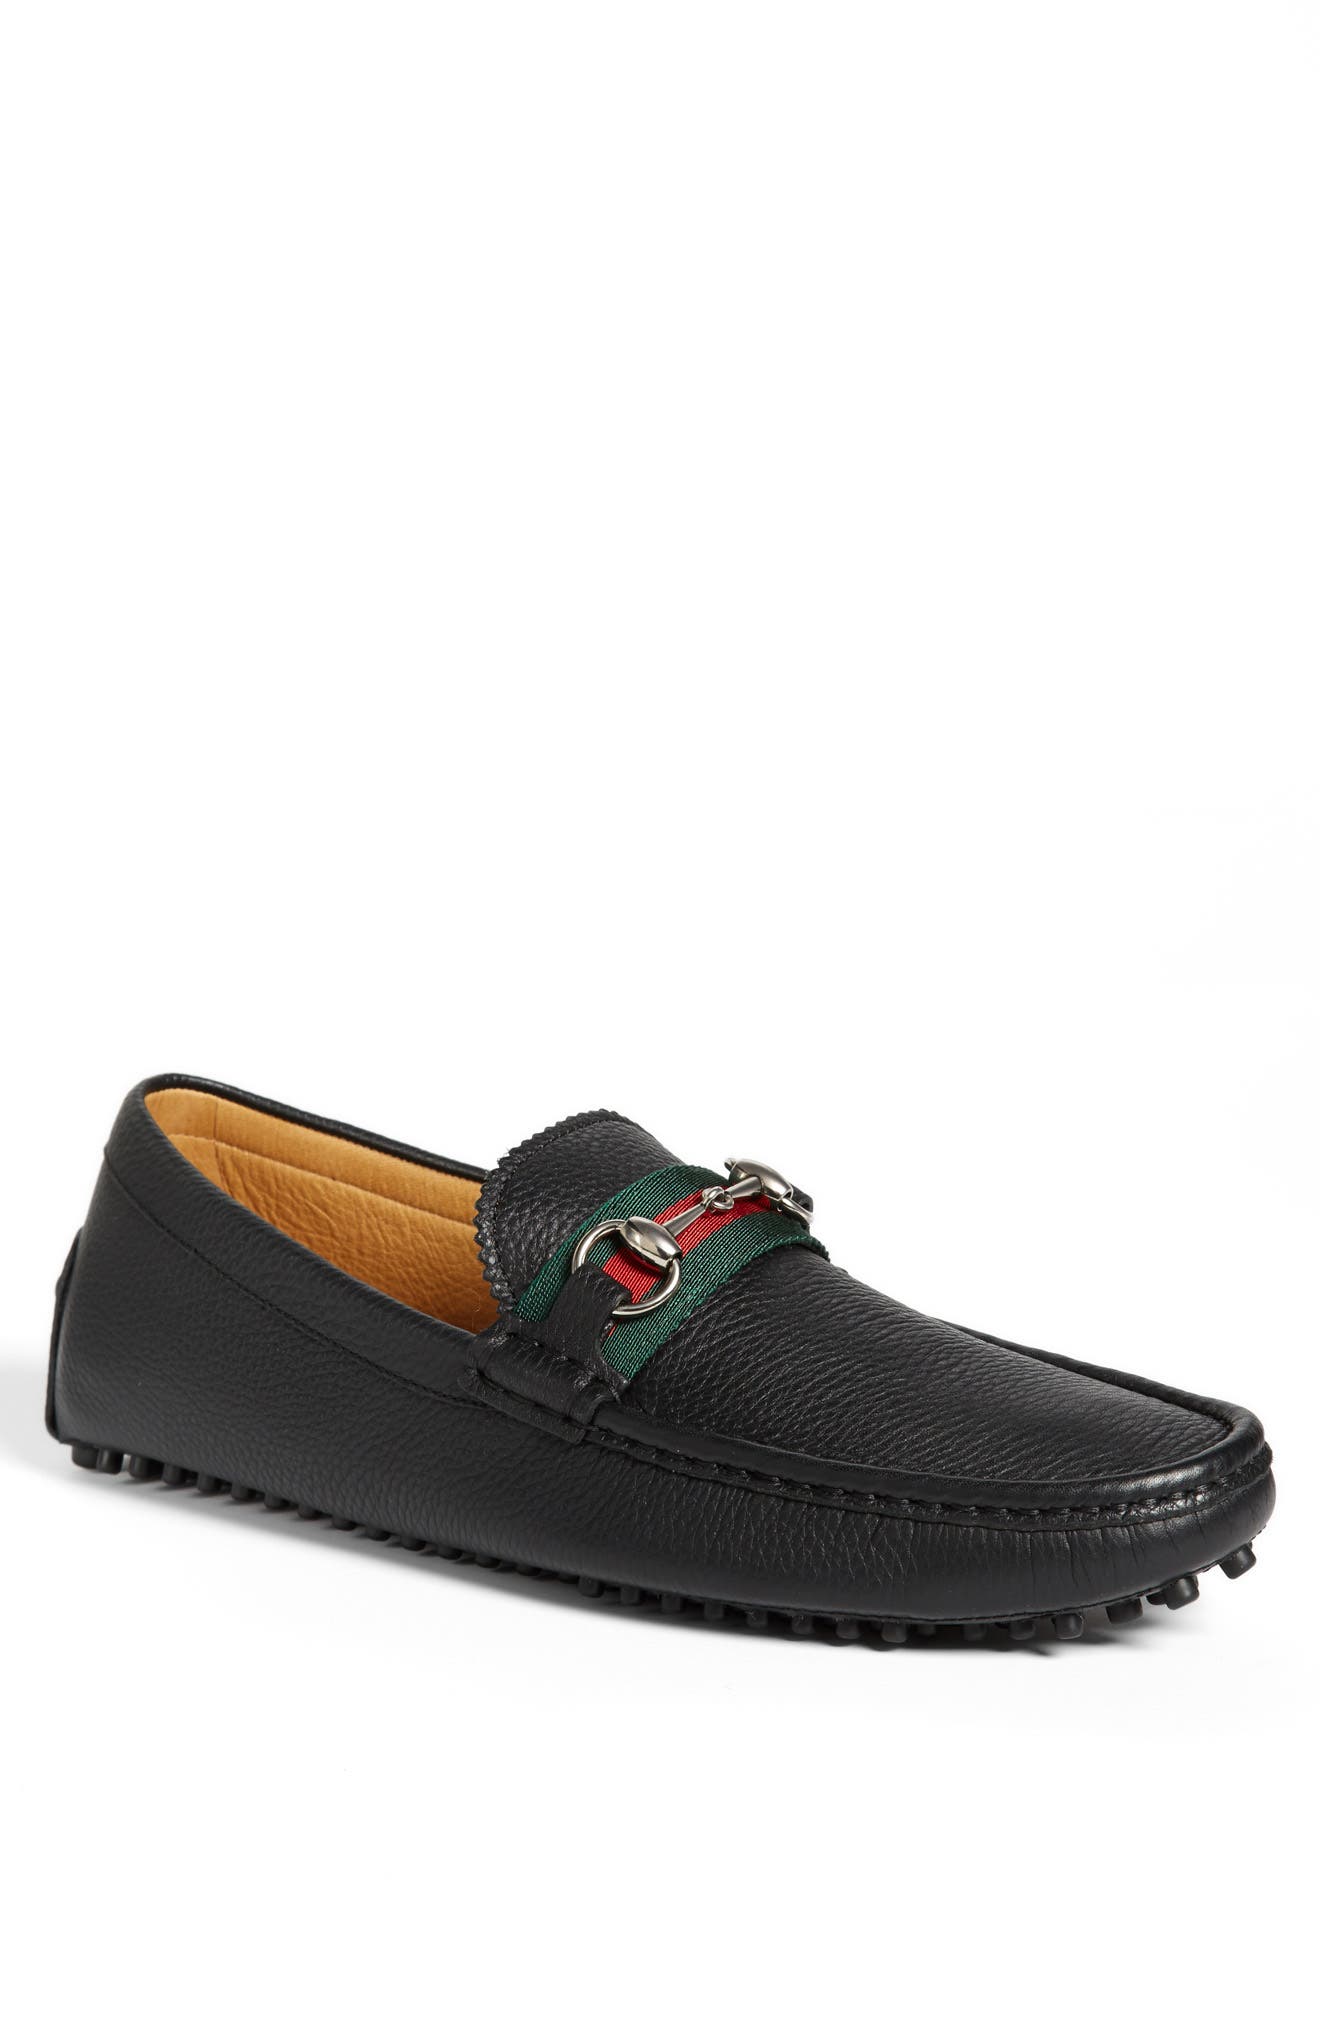 GUCCI Damo Driving Shoe Size 8.5 | eBay